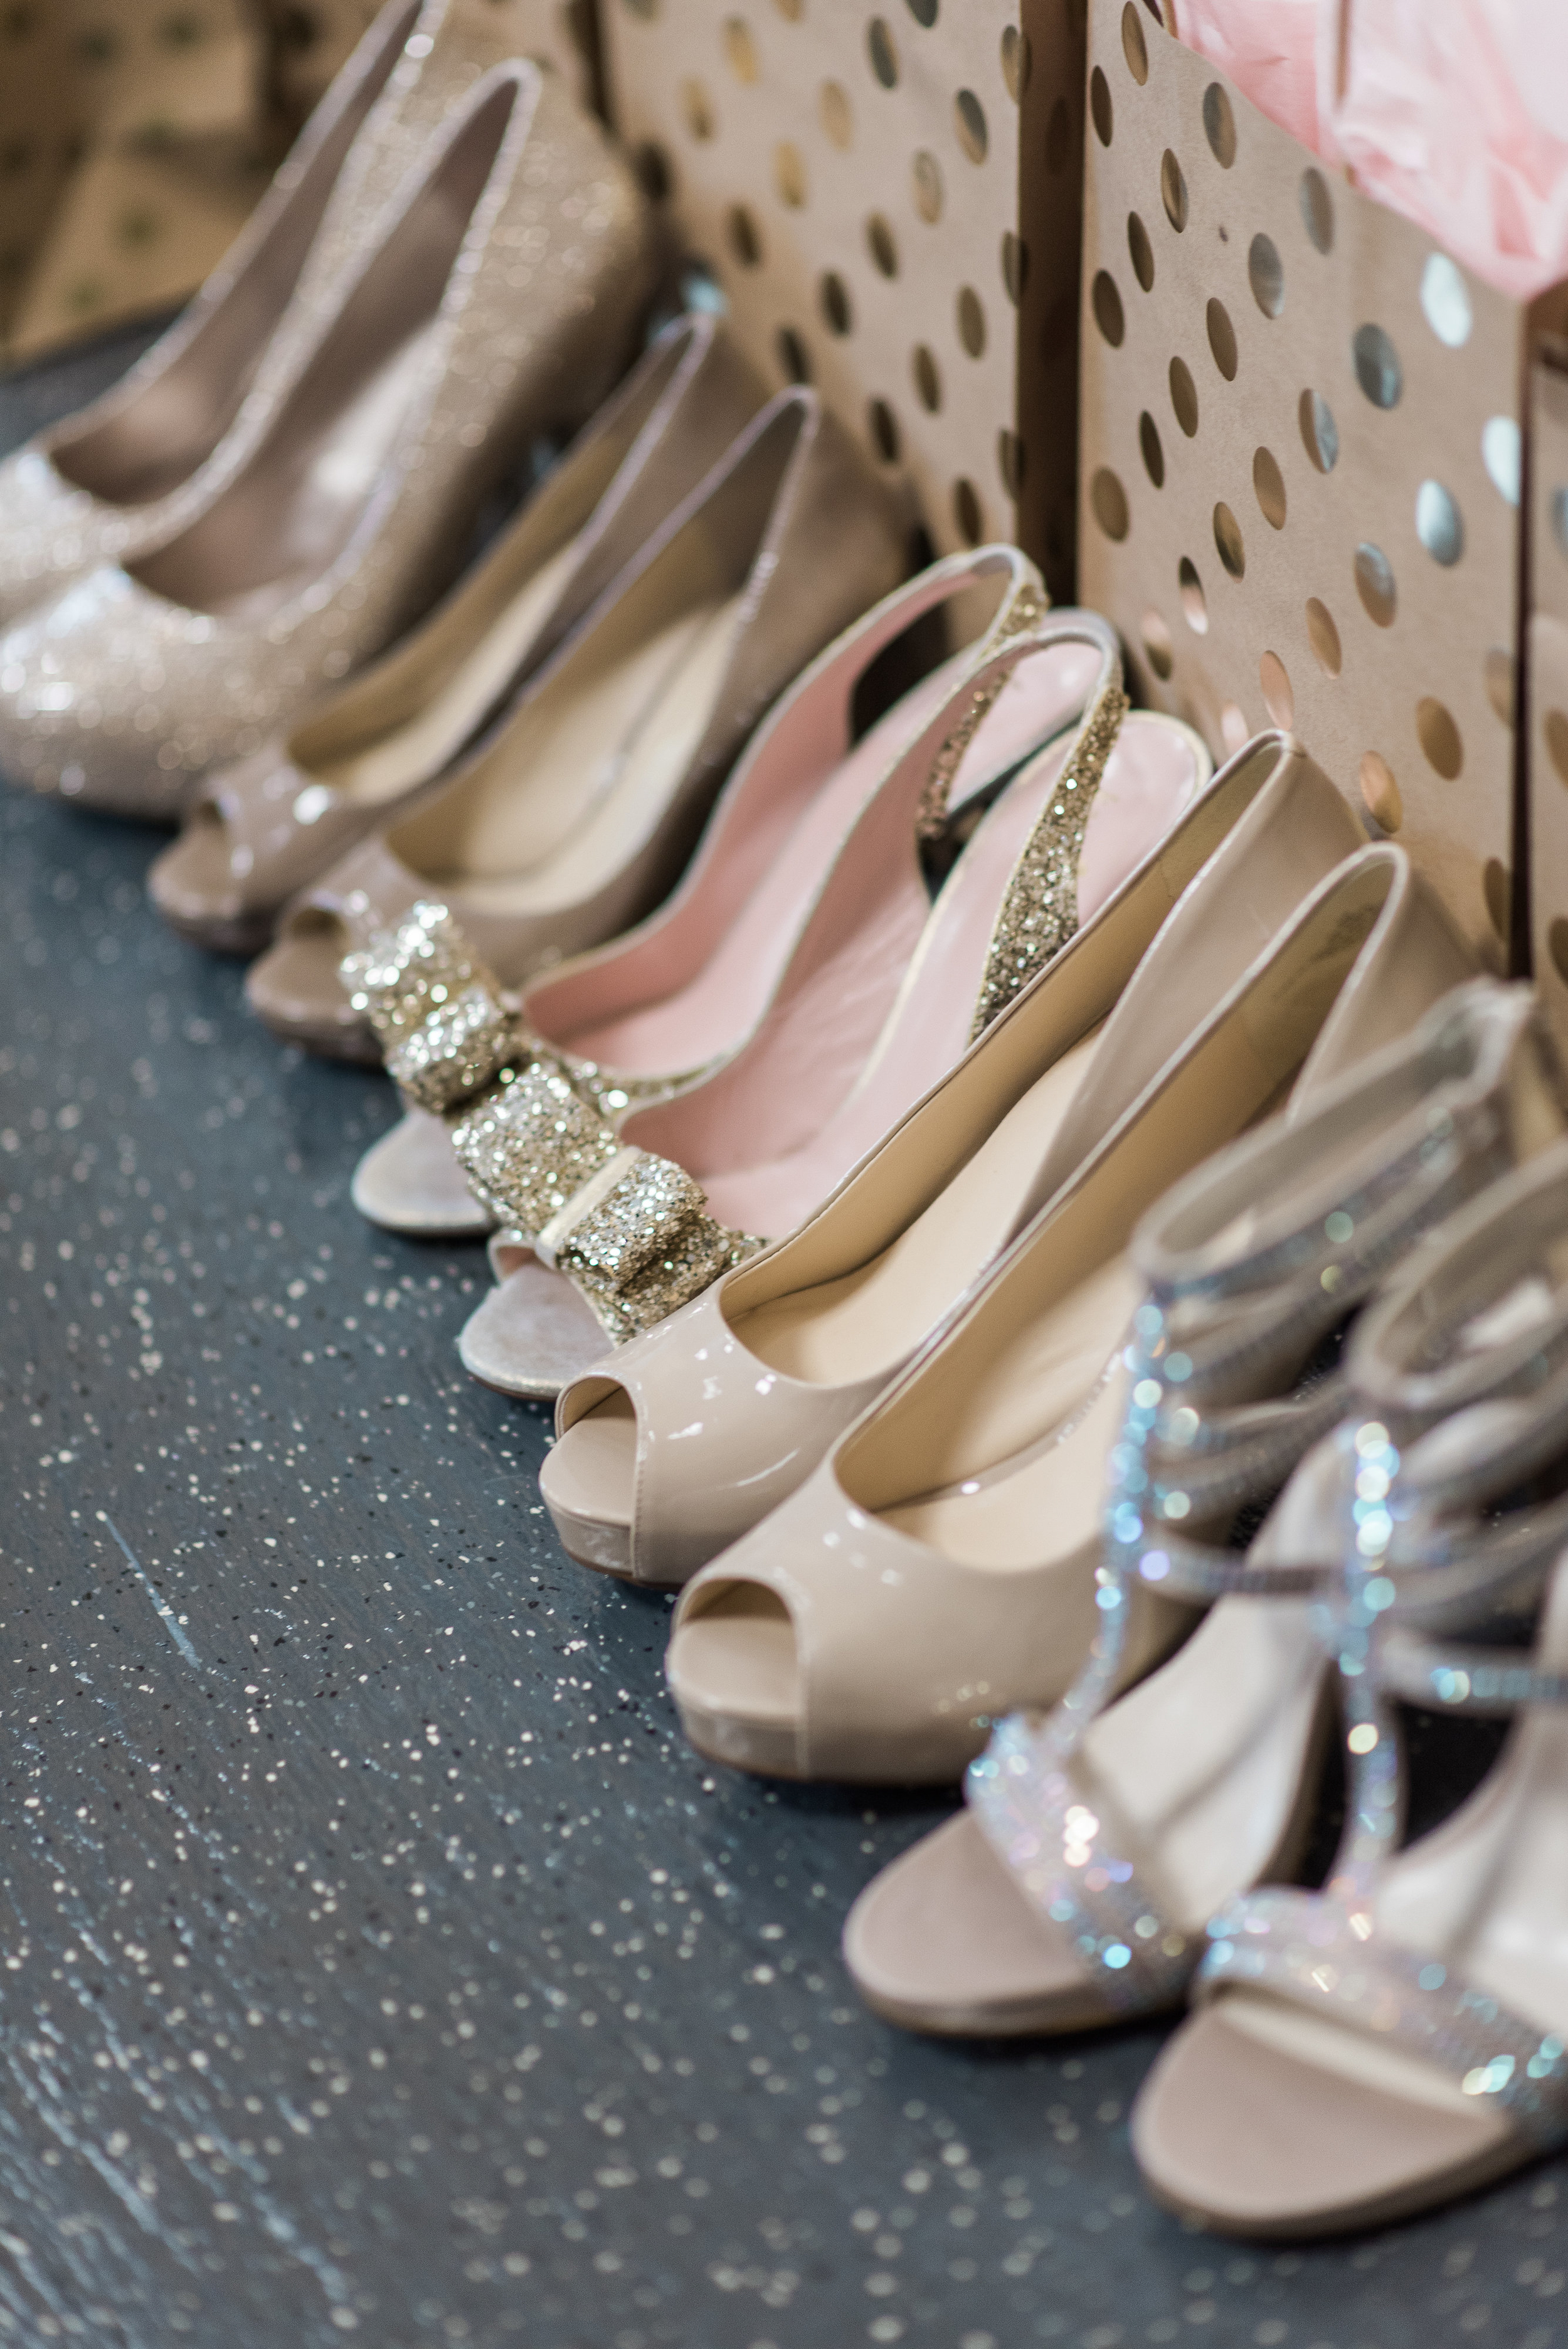 Gold & nude wedding heels for bride and bridesmaids. 